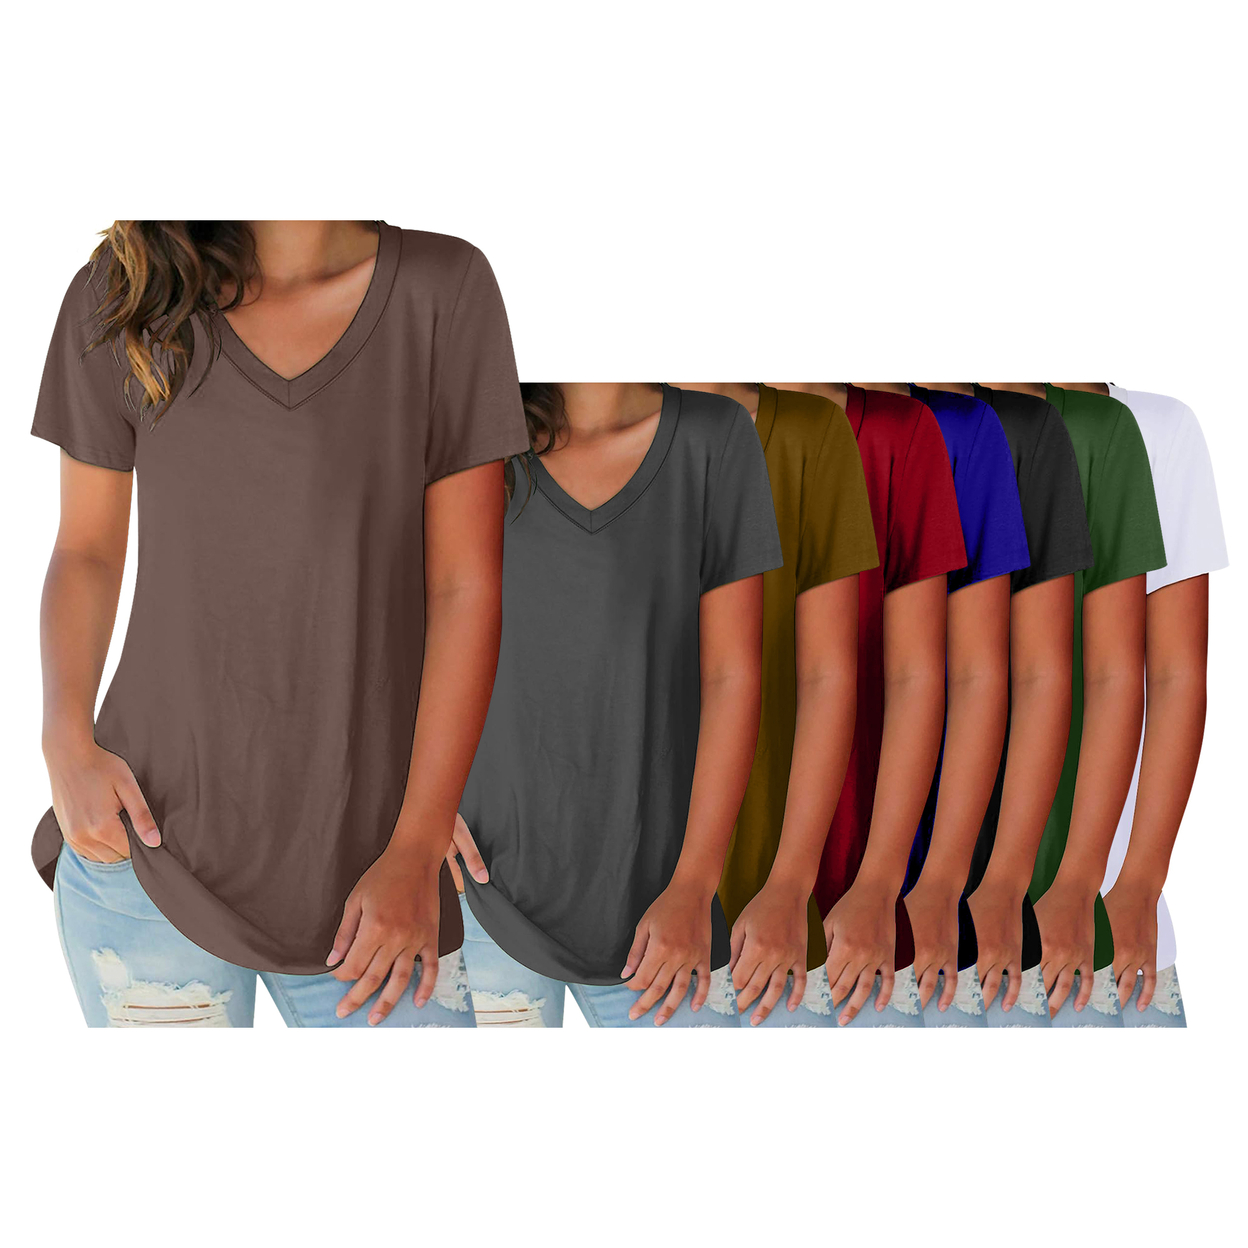 3-Pack: Women's Ultra Soft Smooth Cotton Blend Basic V-Neck Short Sleeve Shirts - Black Navy, Red, Medium